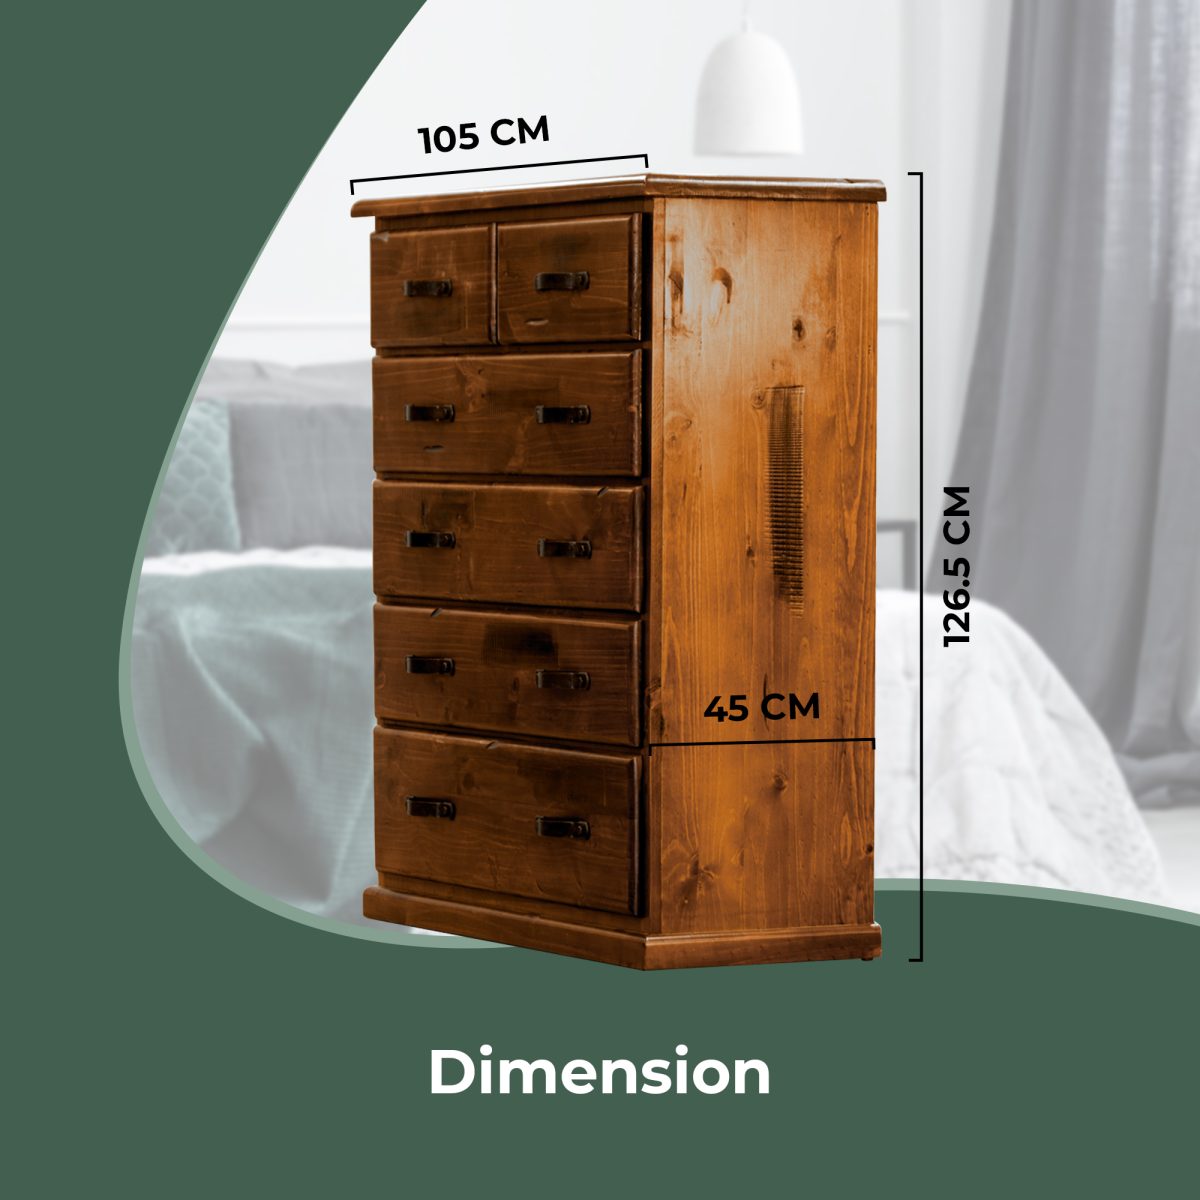 Umber Tallboy 6 Chest of Drawers Solid Pine Wood Storage Cabinet – Dark Brown